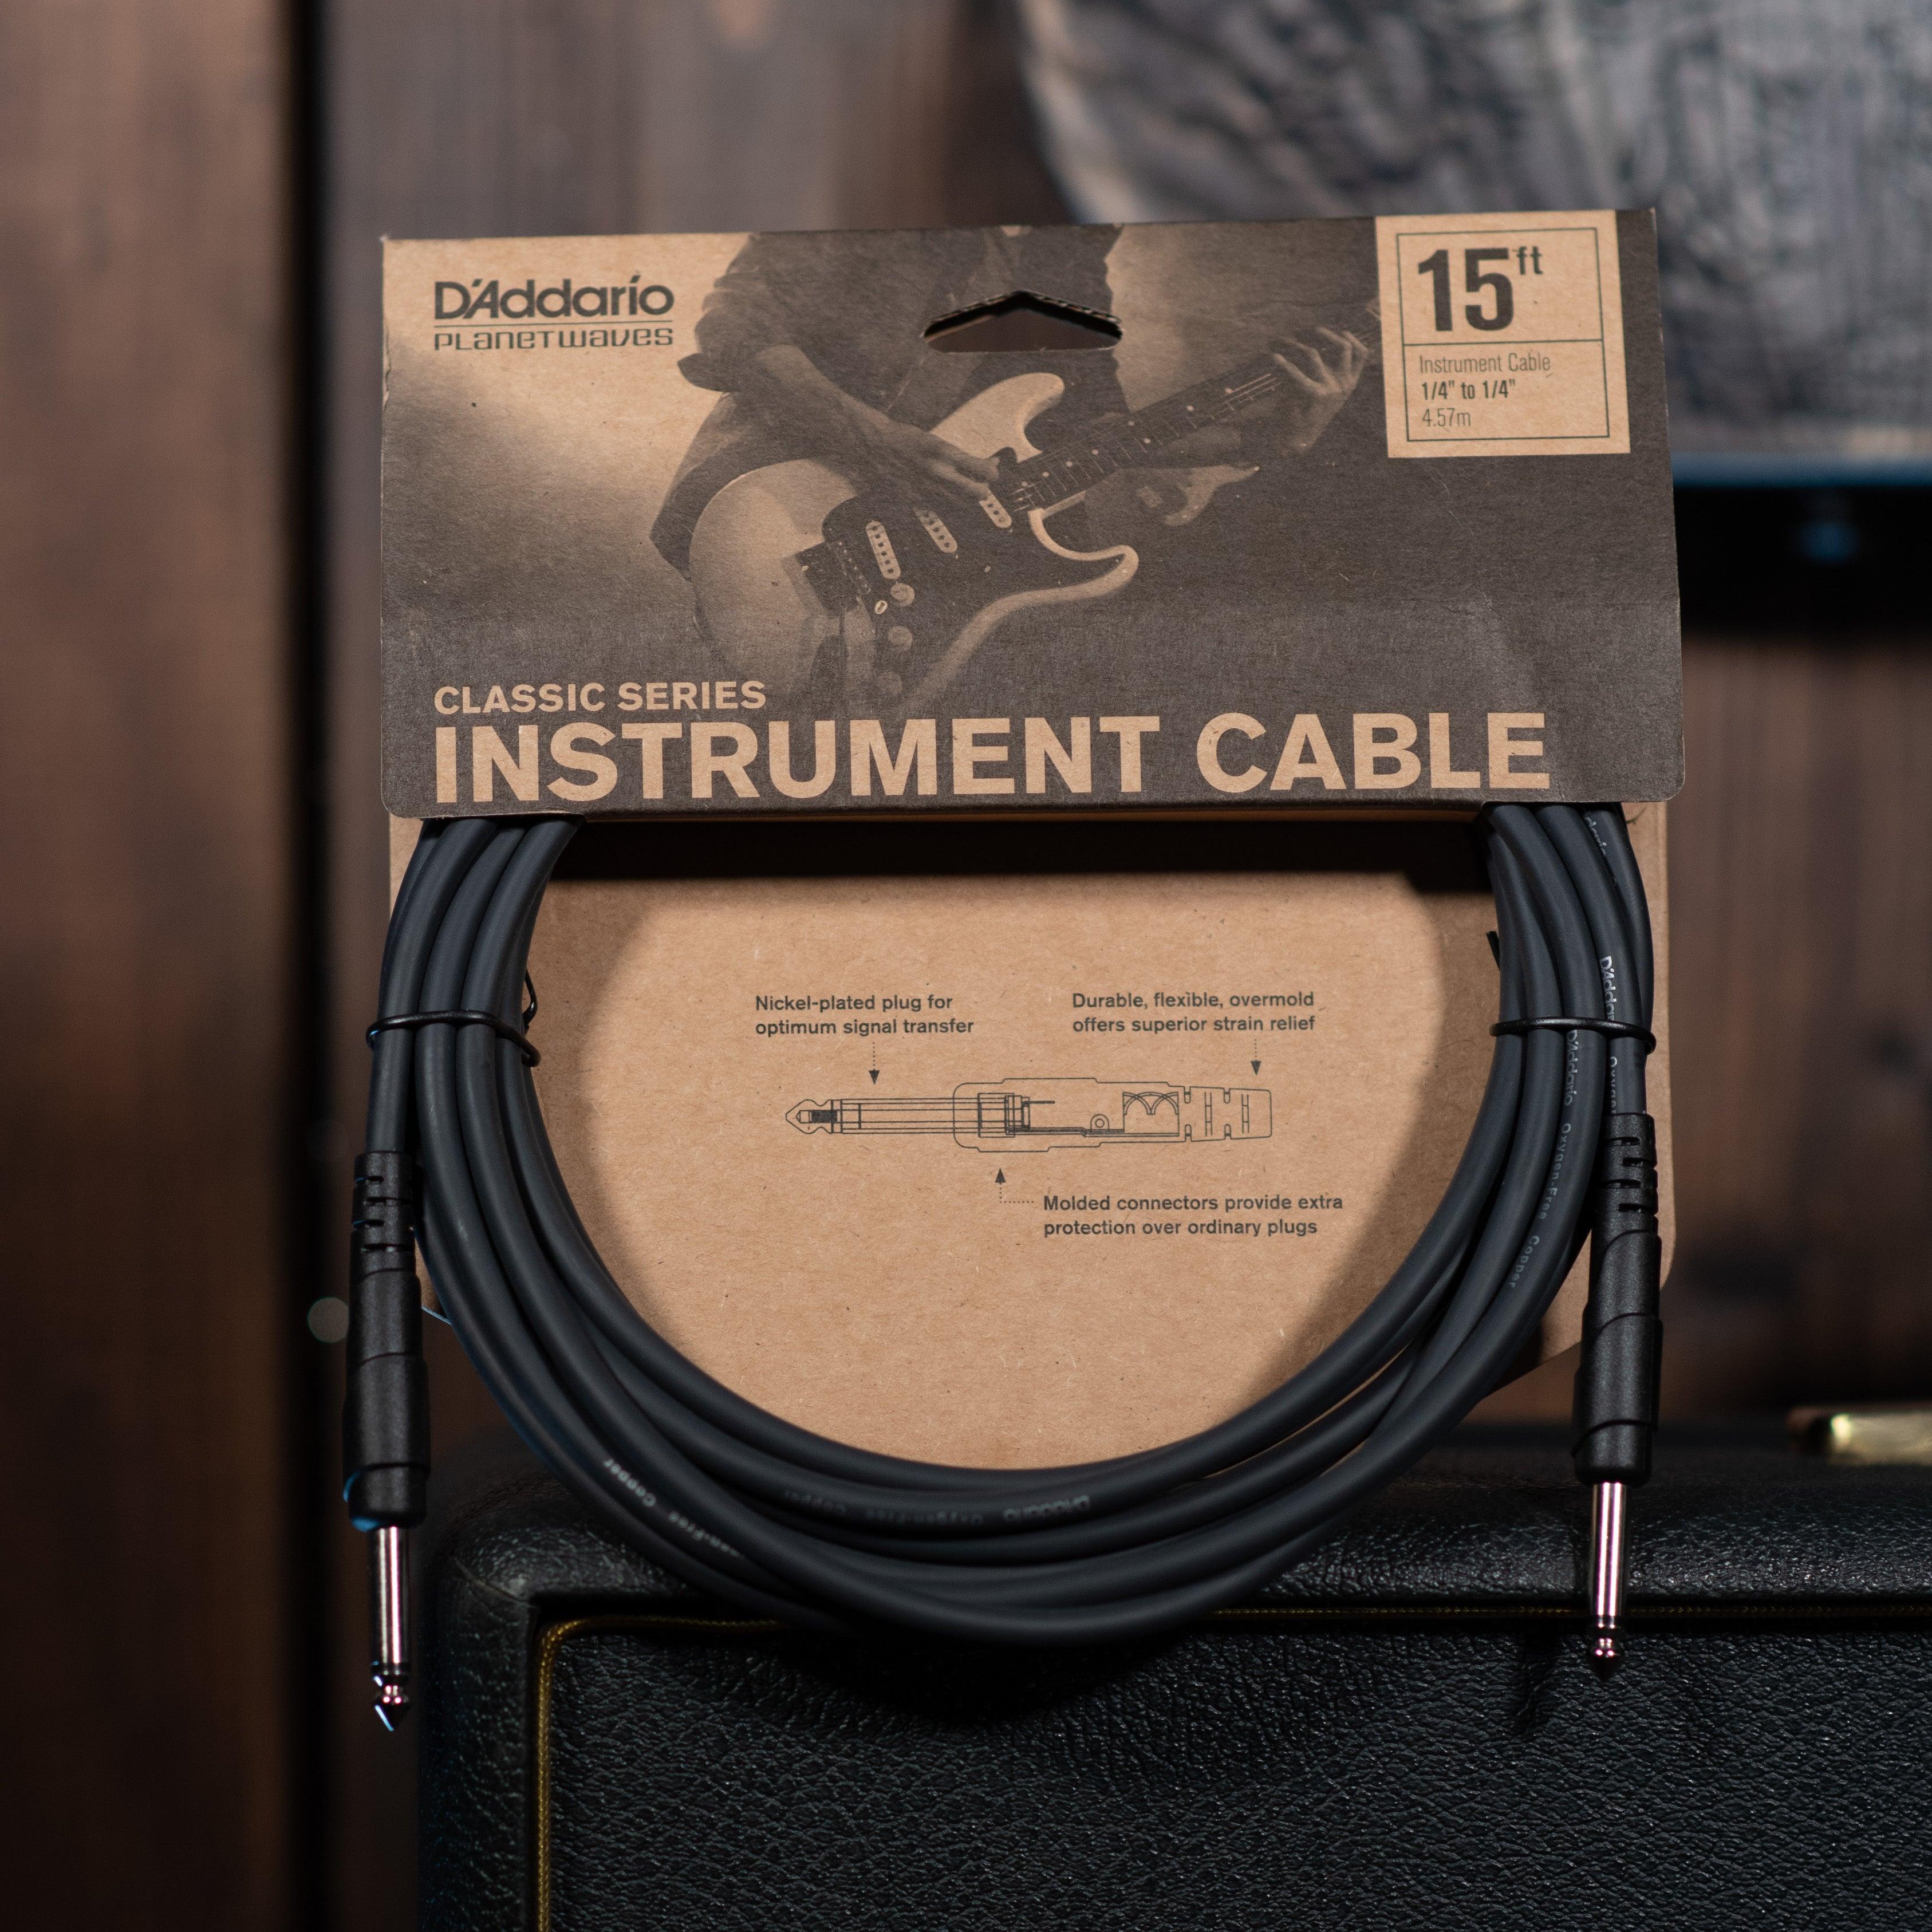 D'addario Classic Series Cable 15 ft. - Impulse Music Co.